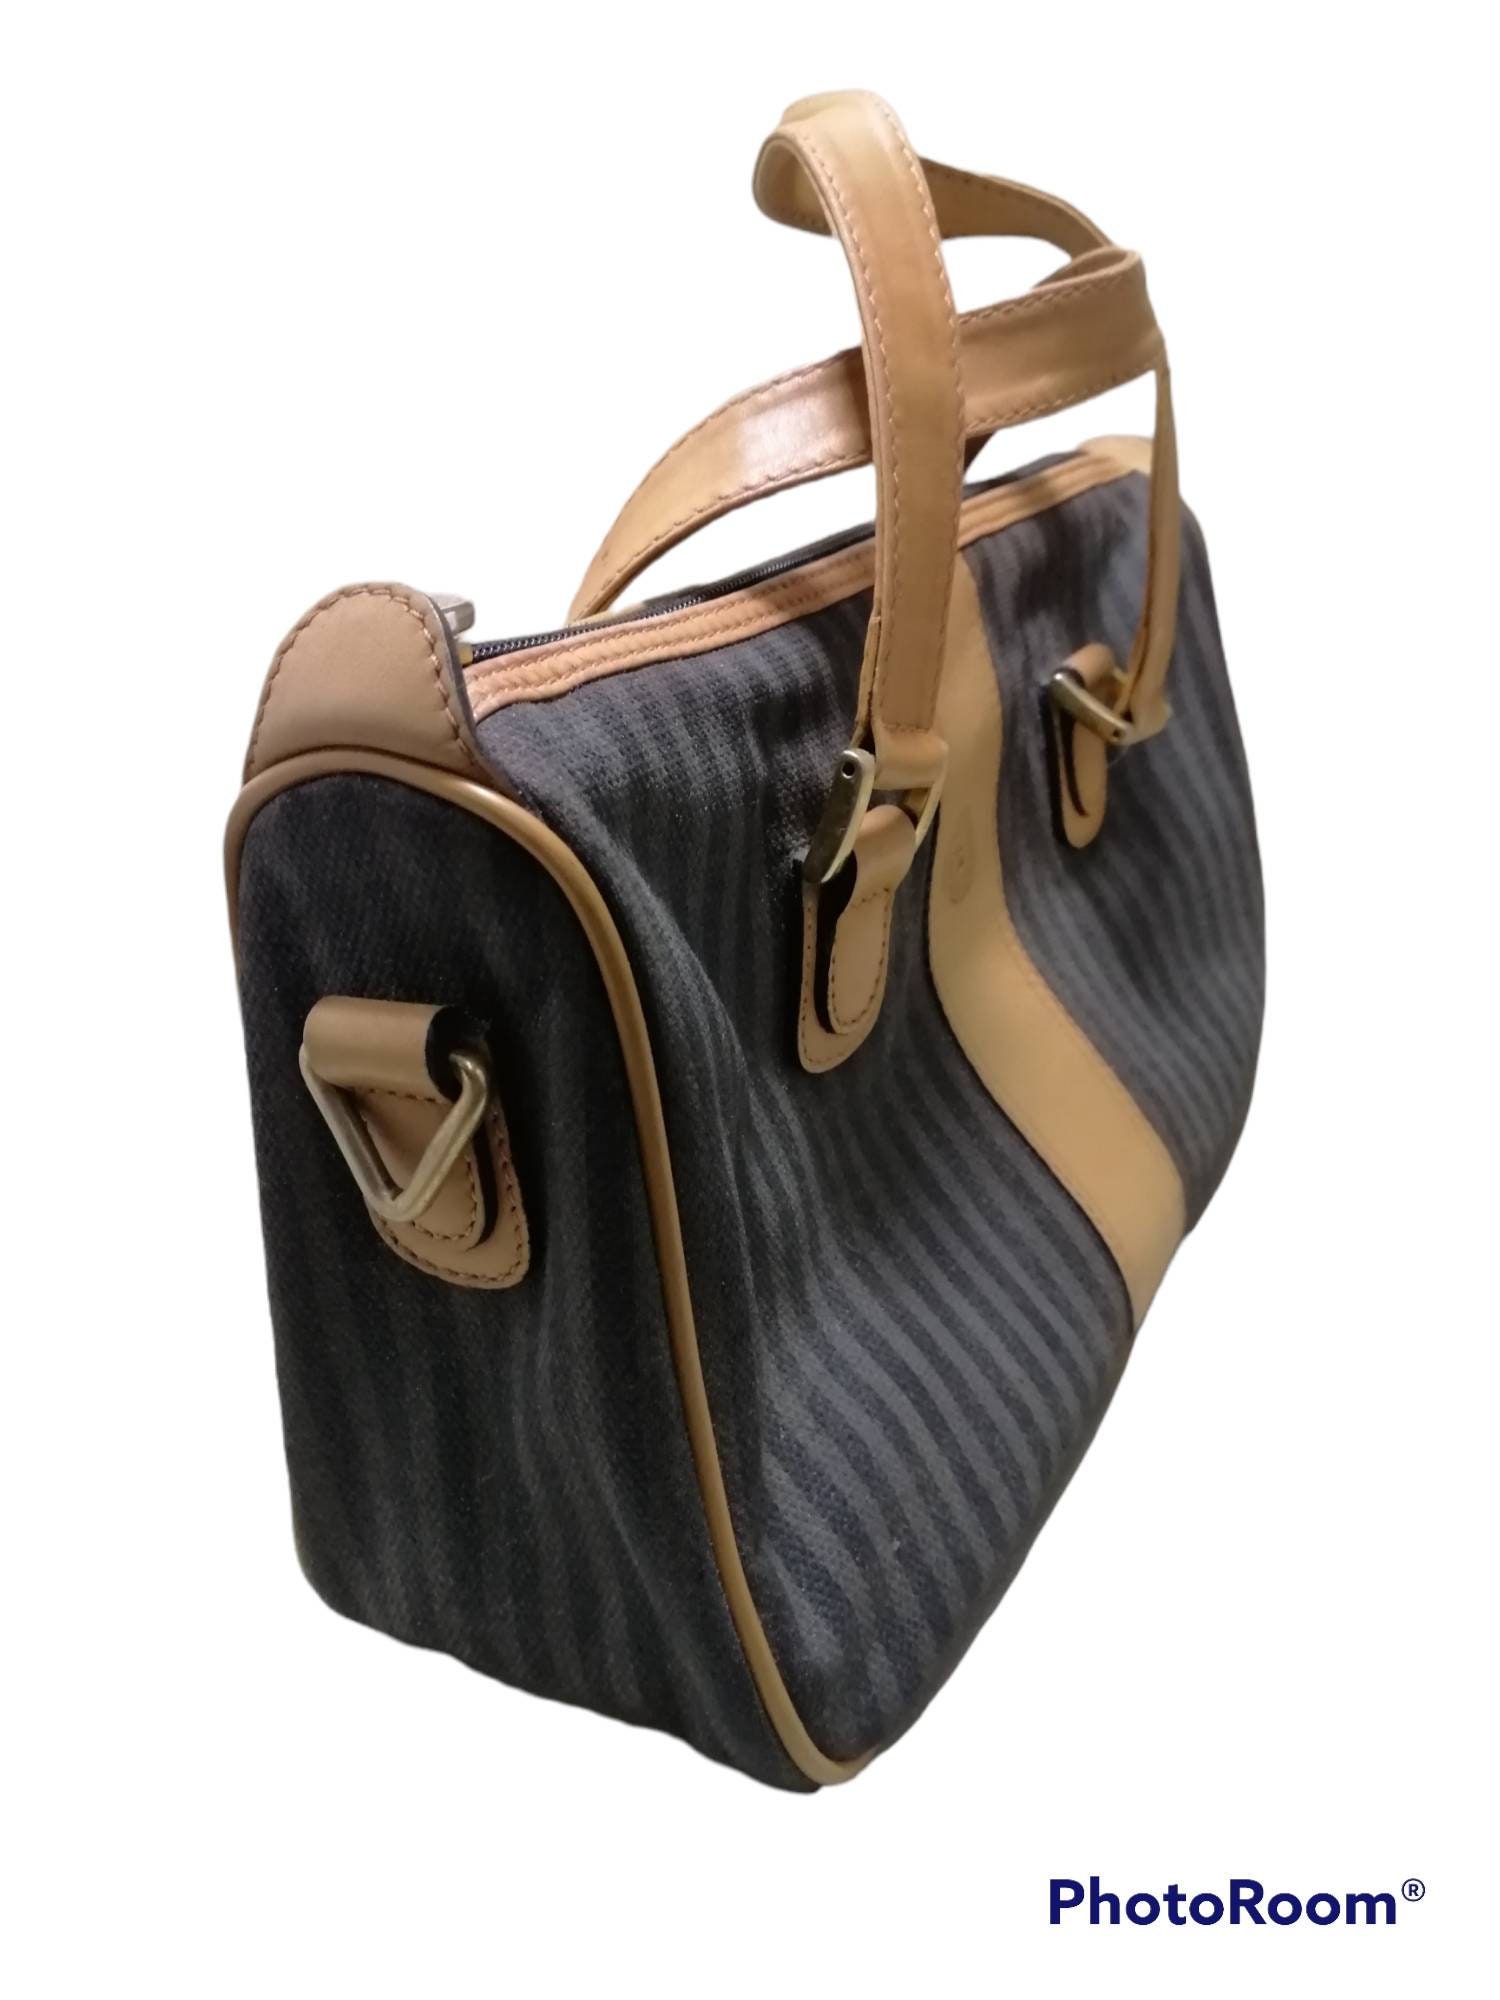 Authentic Vintage Fendi Roma Boston Tote Style Handbag Bag